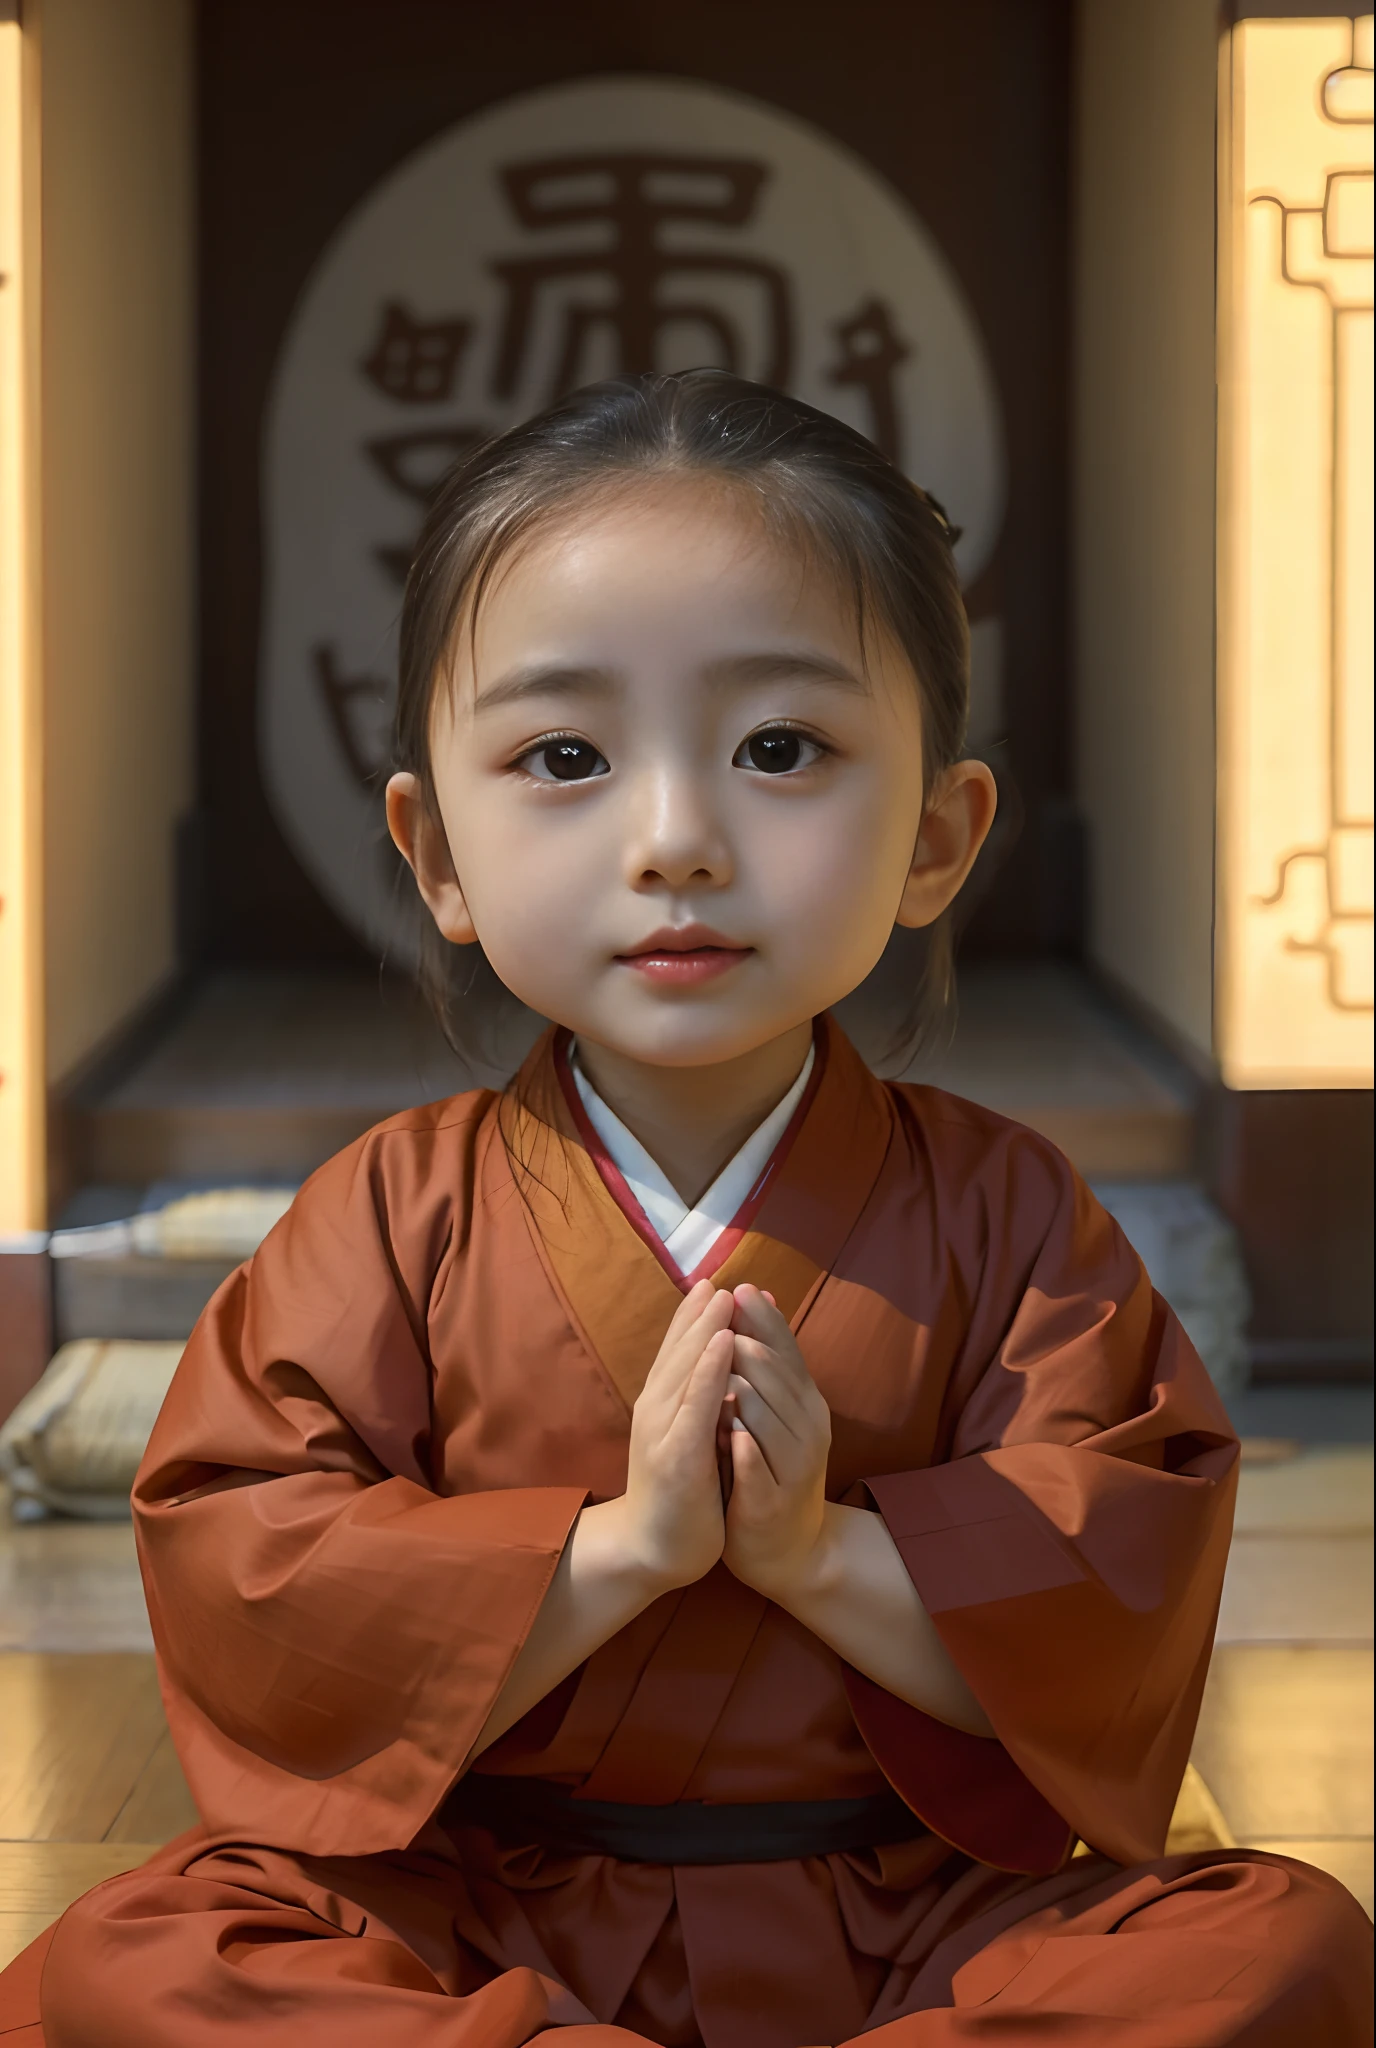 Alafeld 亞洲女孩 sitting on the floor in kimono, 一個日本女孩的肖像, Young 亞洲女孩, 特寫肖像拍攝, 特寫肖像拍攝, 中國女孩, 平靜的表情, 和尚, 穿著棕色長袍, 韓國女孩, 亞洲女孩, 特寫肖像拍攝, 佛教徒, 居中肖像, 人像拍攝, 在寺廟裡, 近距離肖像, 和尚服裝